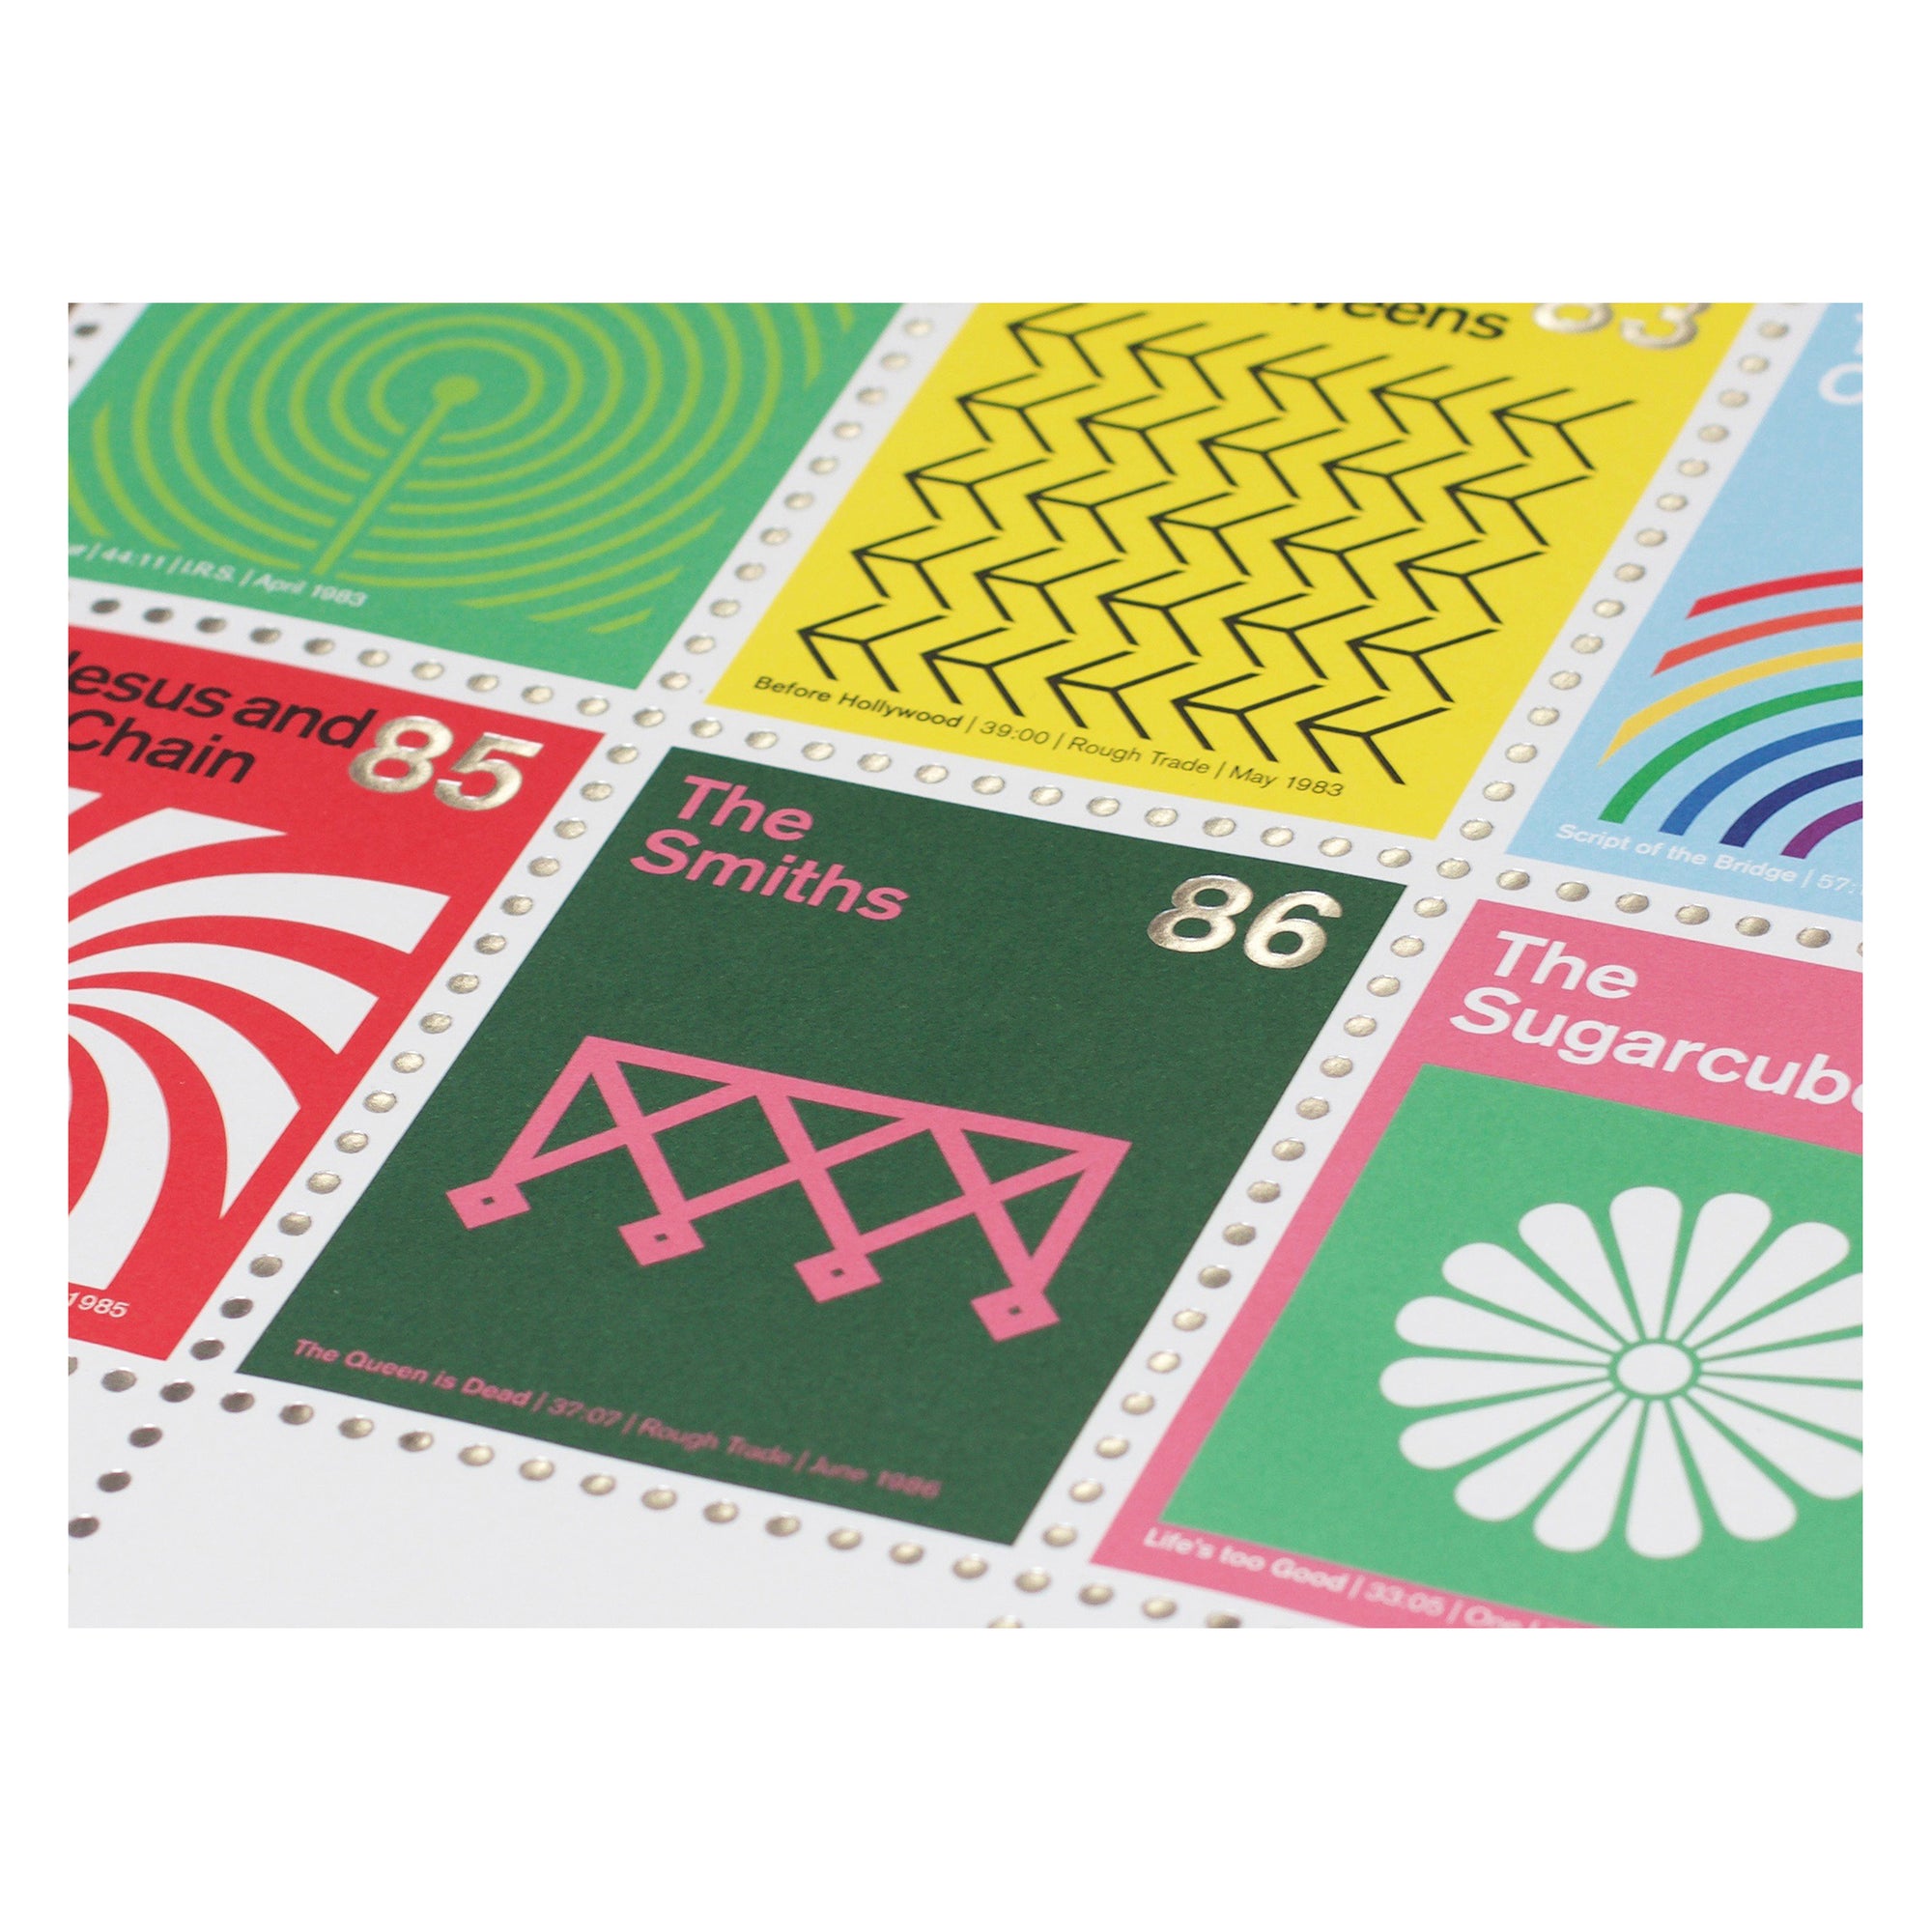 Stamp Album Print - Post-Punk